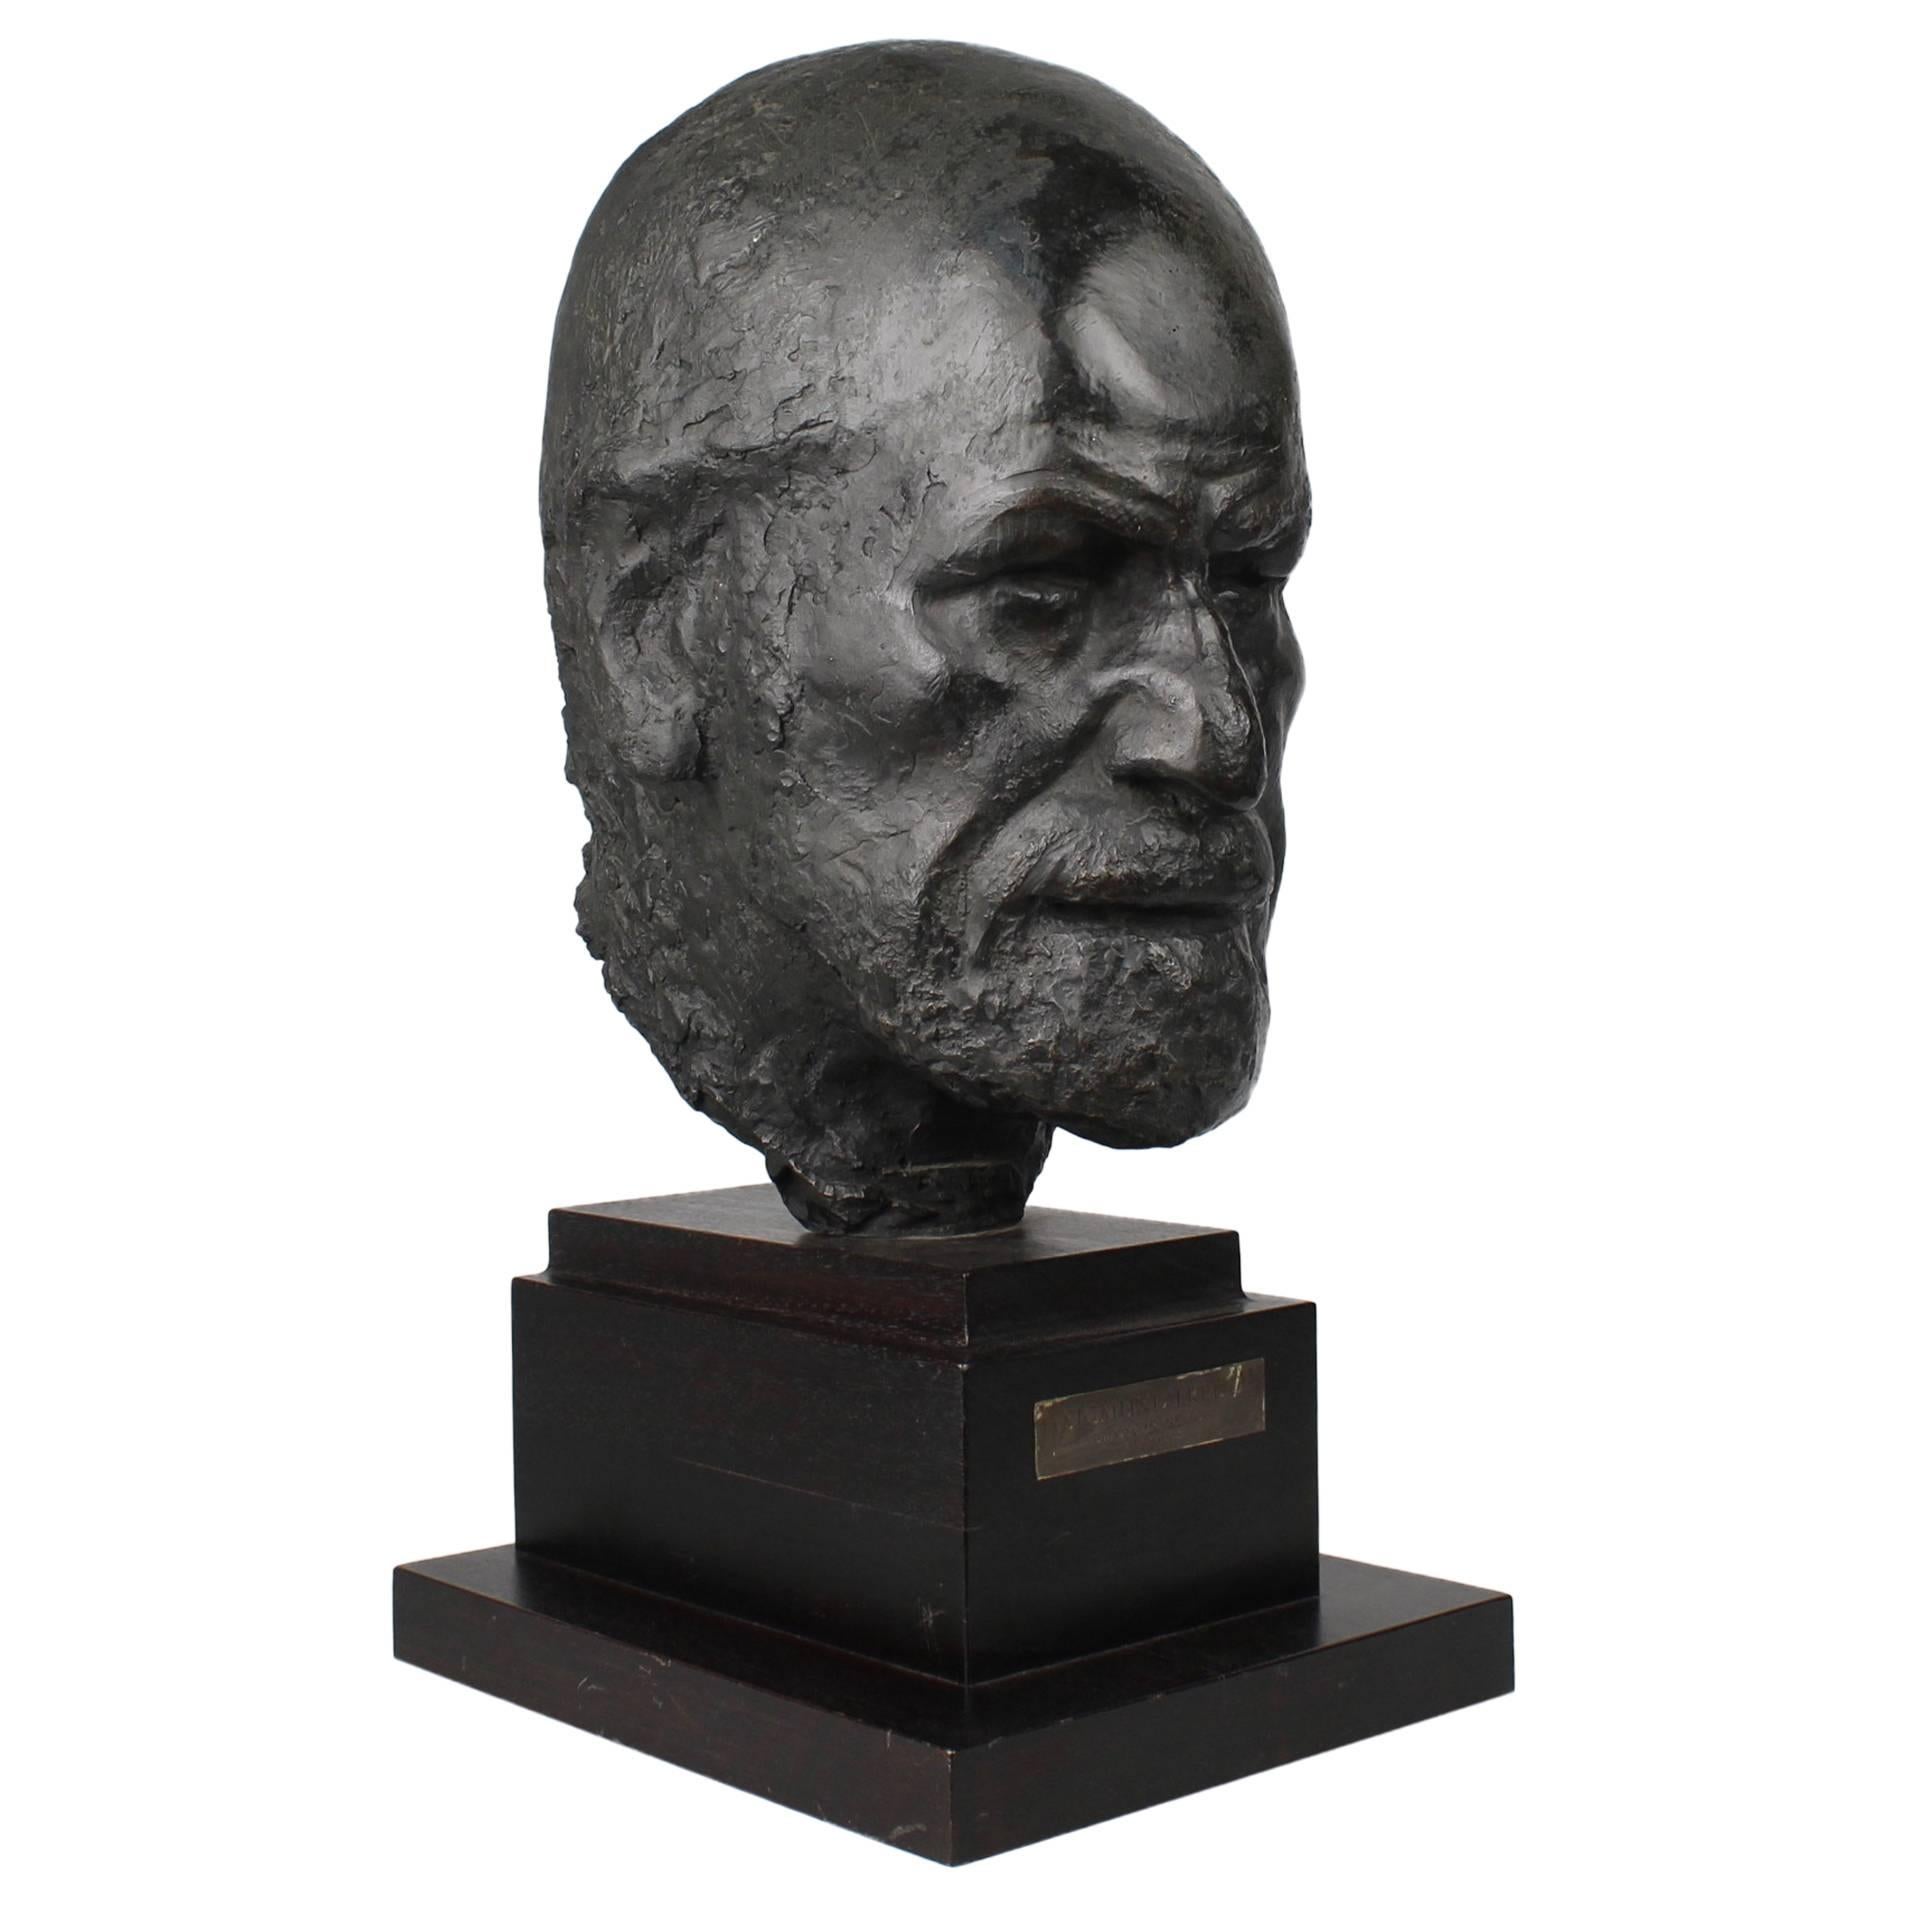 Large Bronze Sculpture or Bust of Psychoanalyst Sigmund Freud by Oscar Nemon